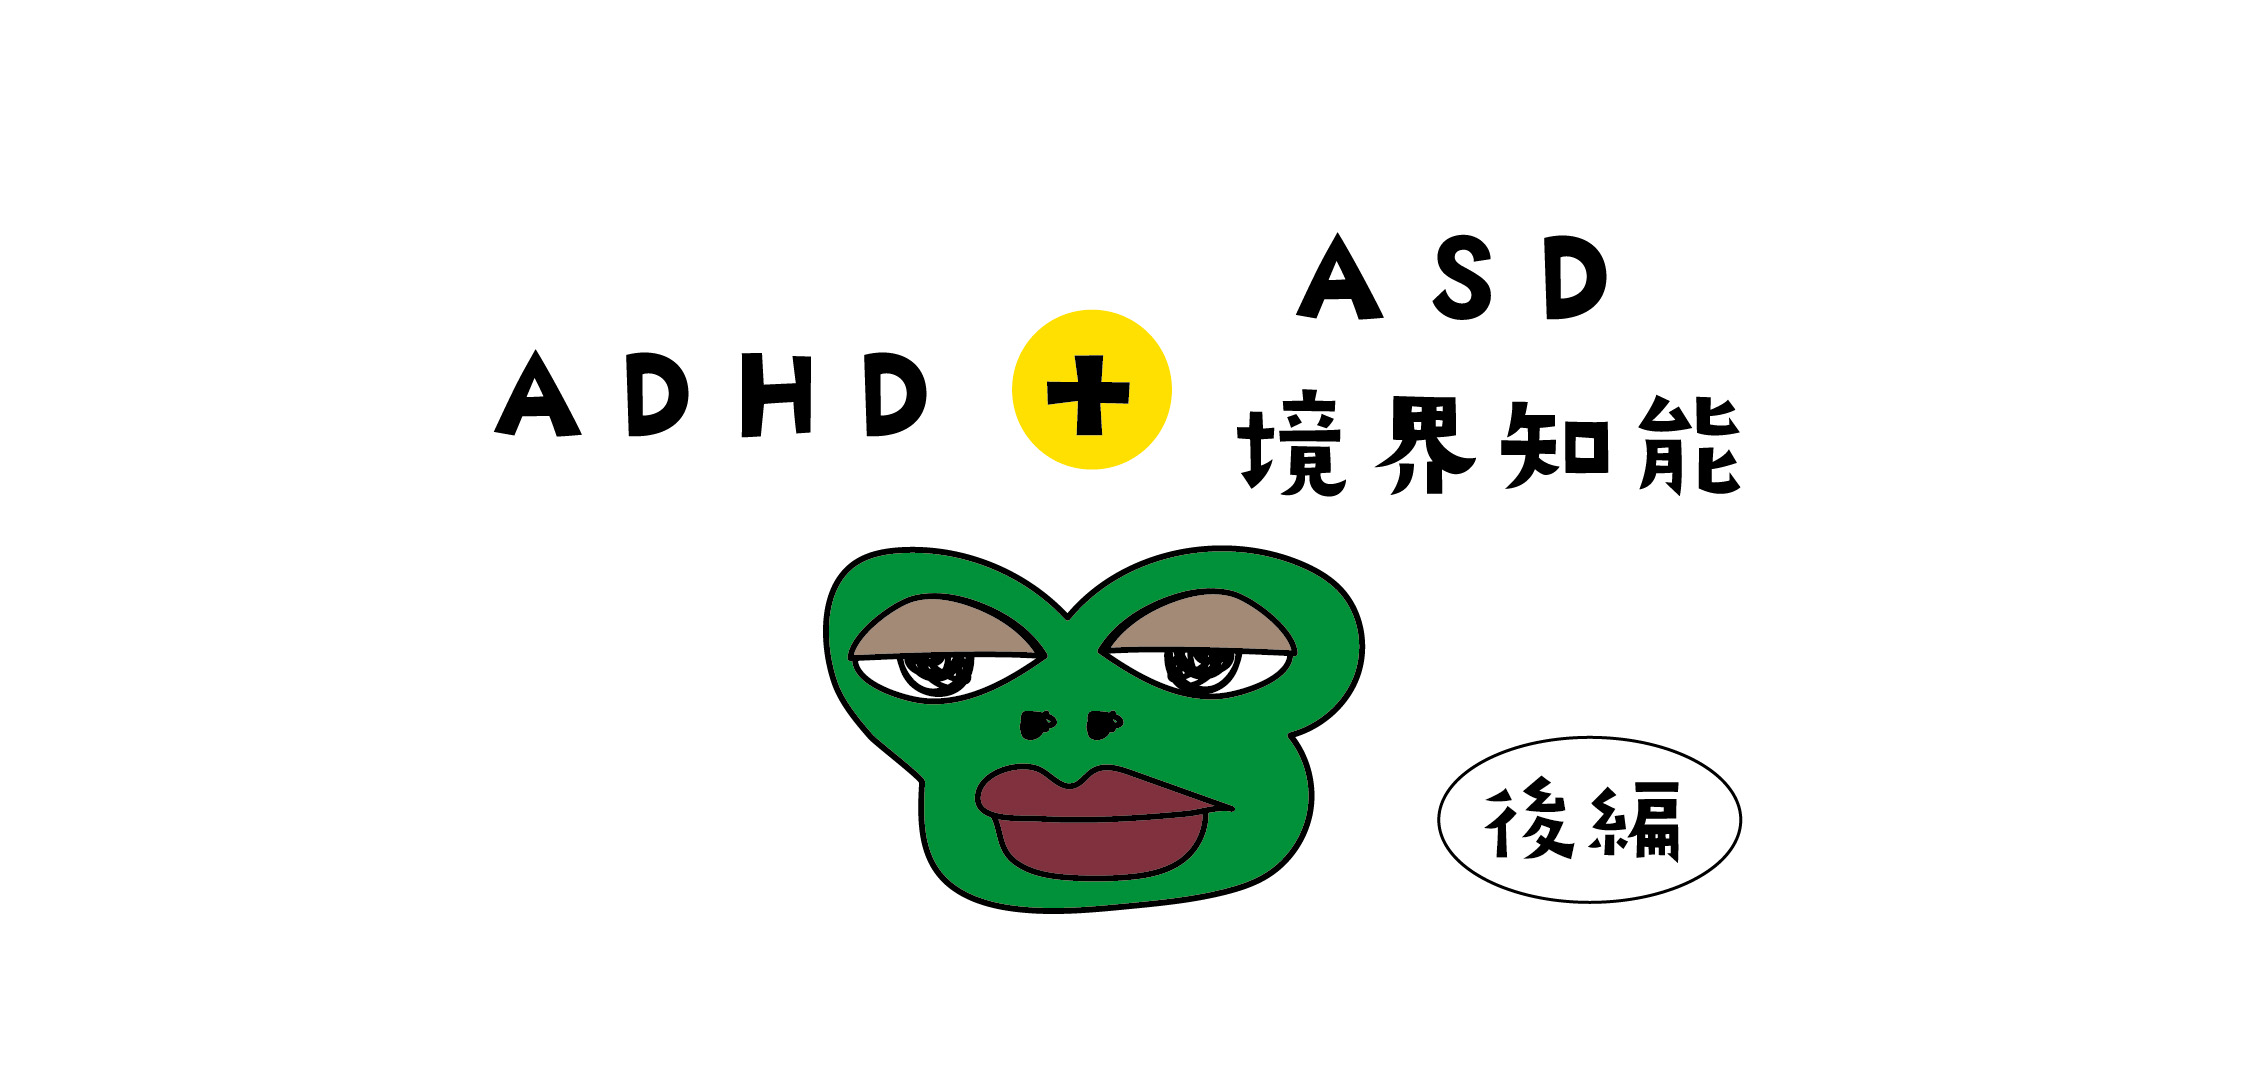 ADHDとASDと境界知能の合併（後編）